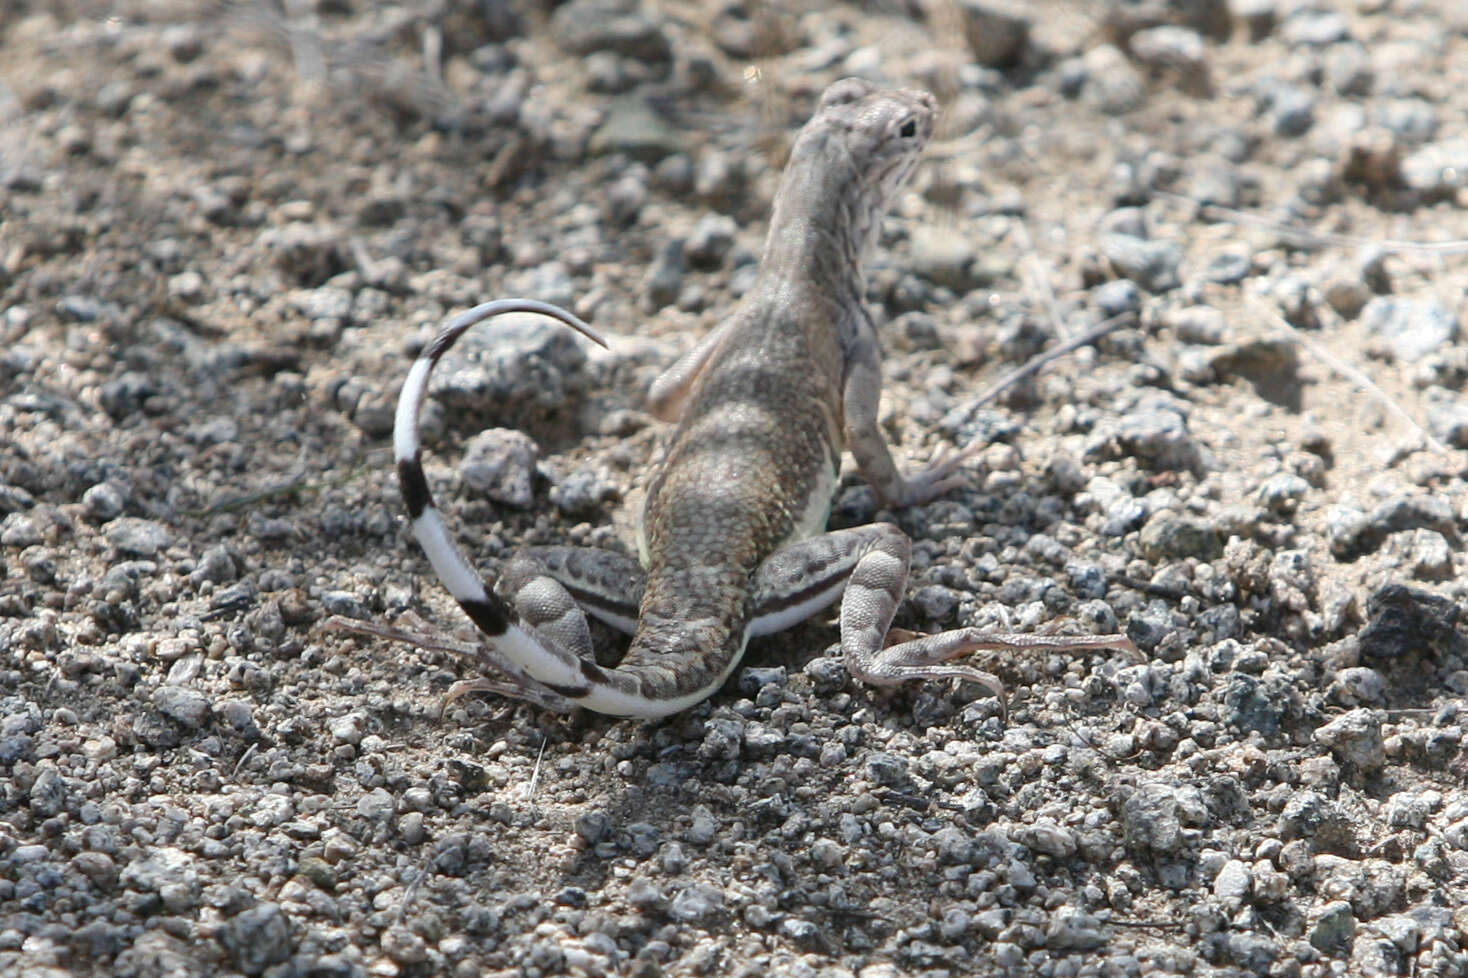 Image of horned lizard